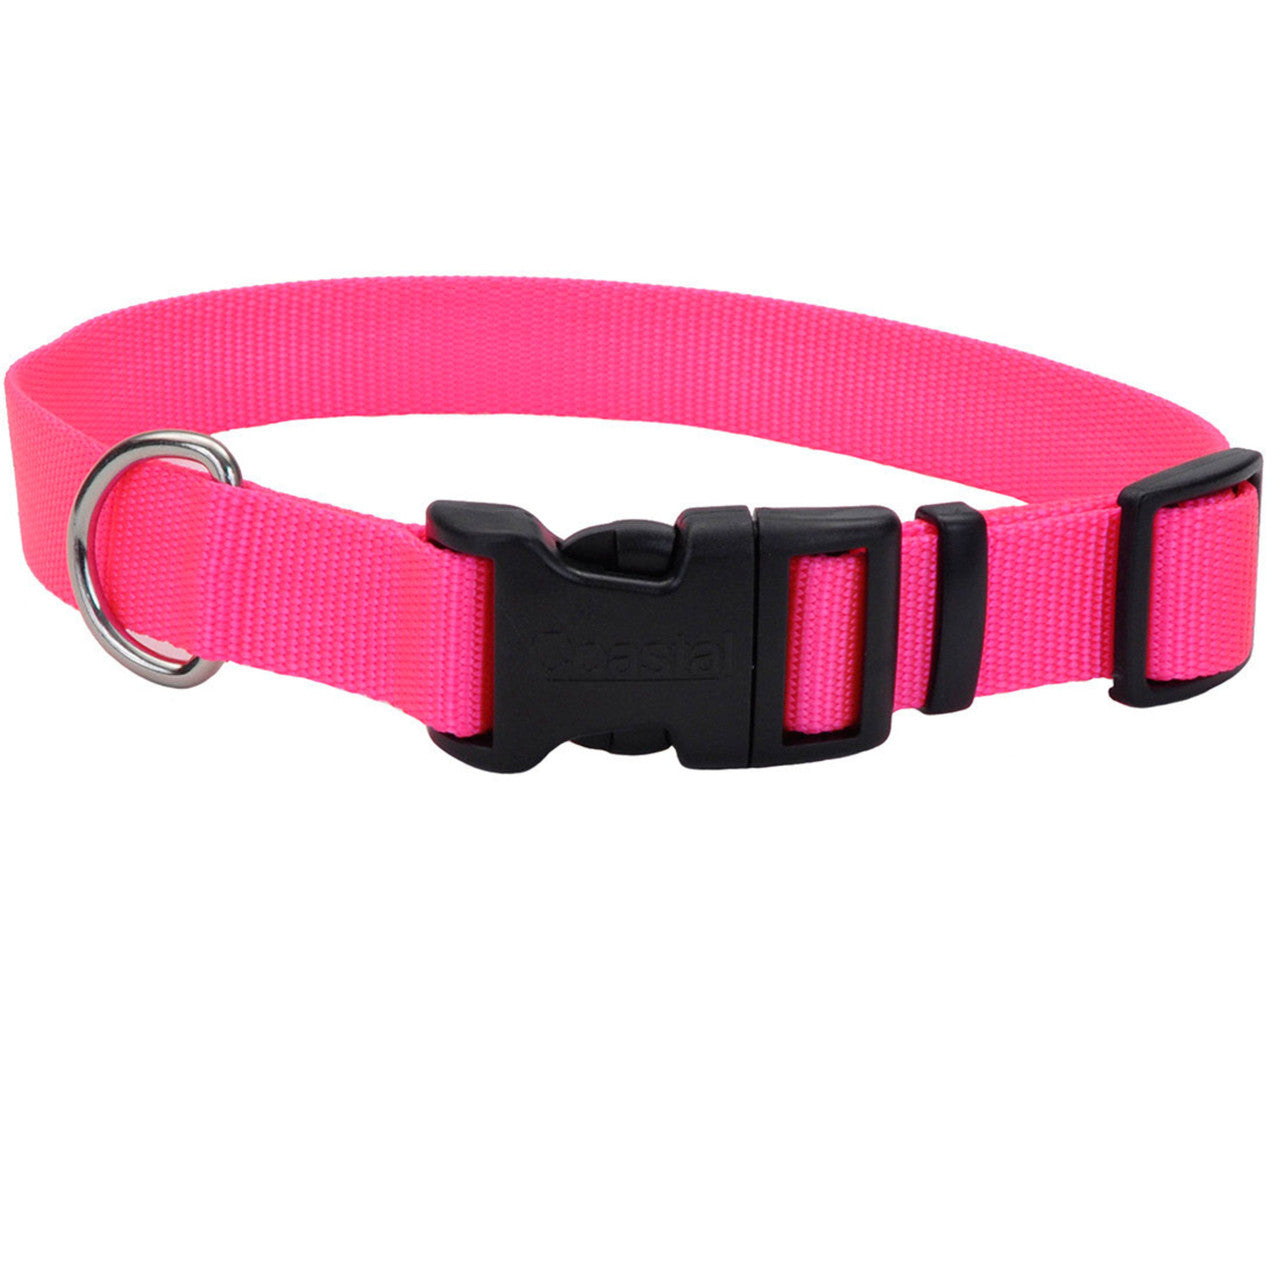 Coastal Adjustable Nylon Dog Collar with Plastic Buckle Neon Pink 3/8 in x 8-12 in